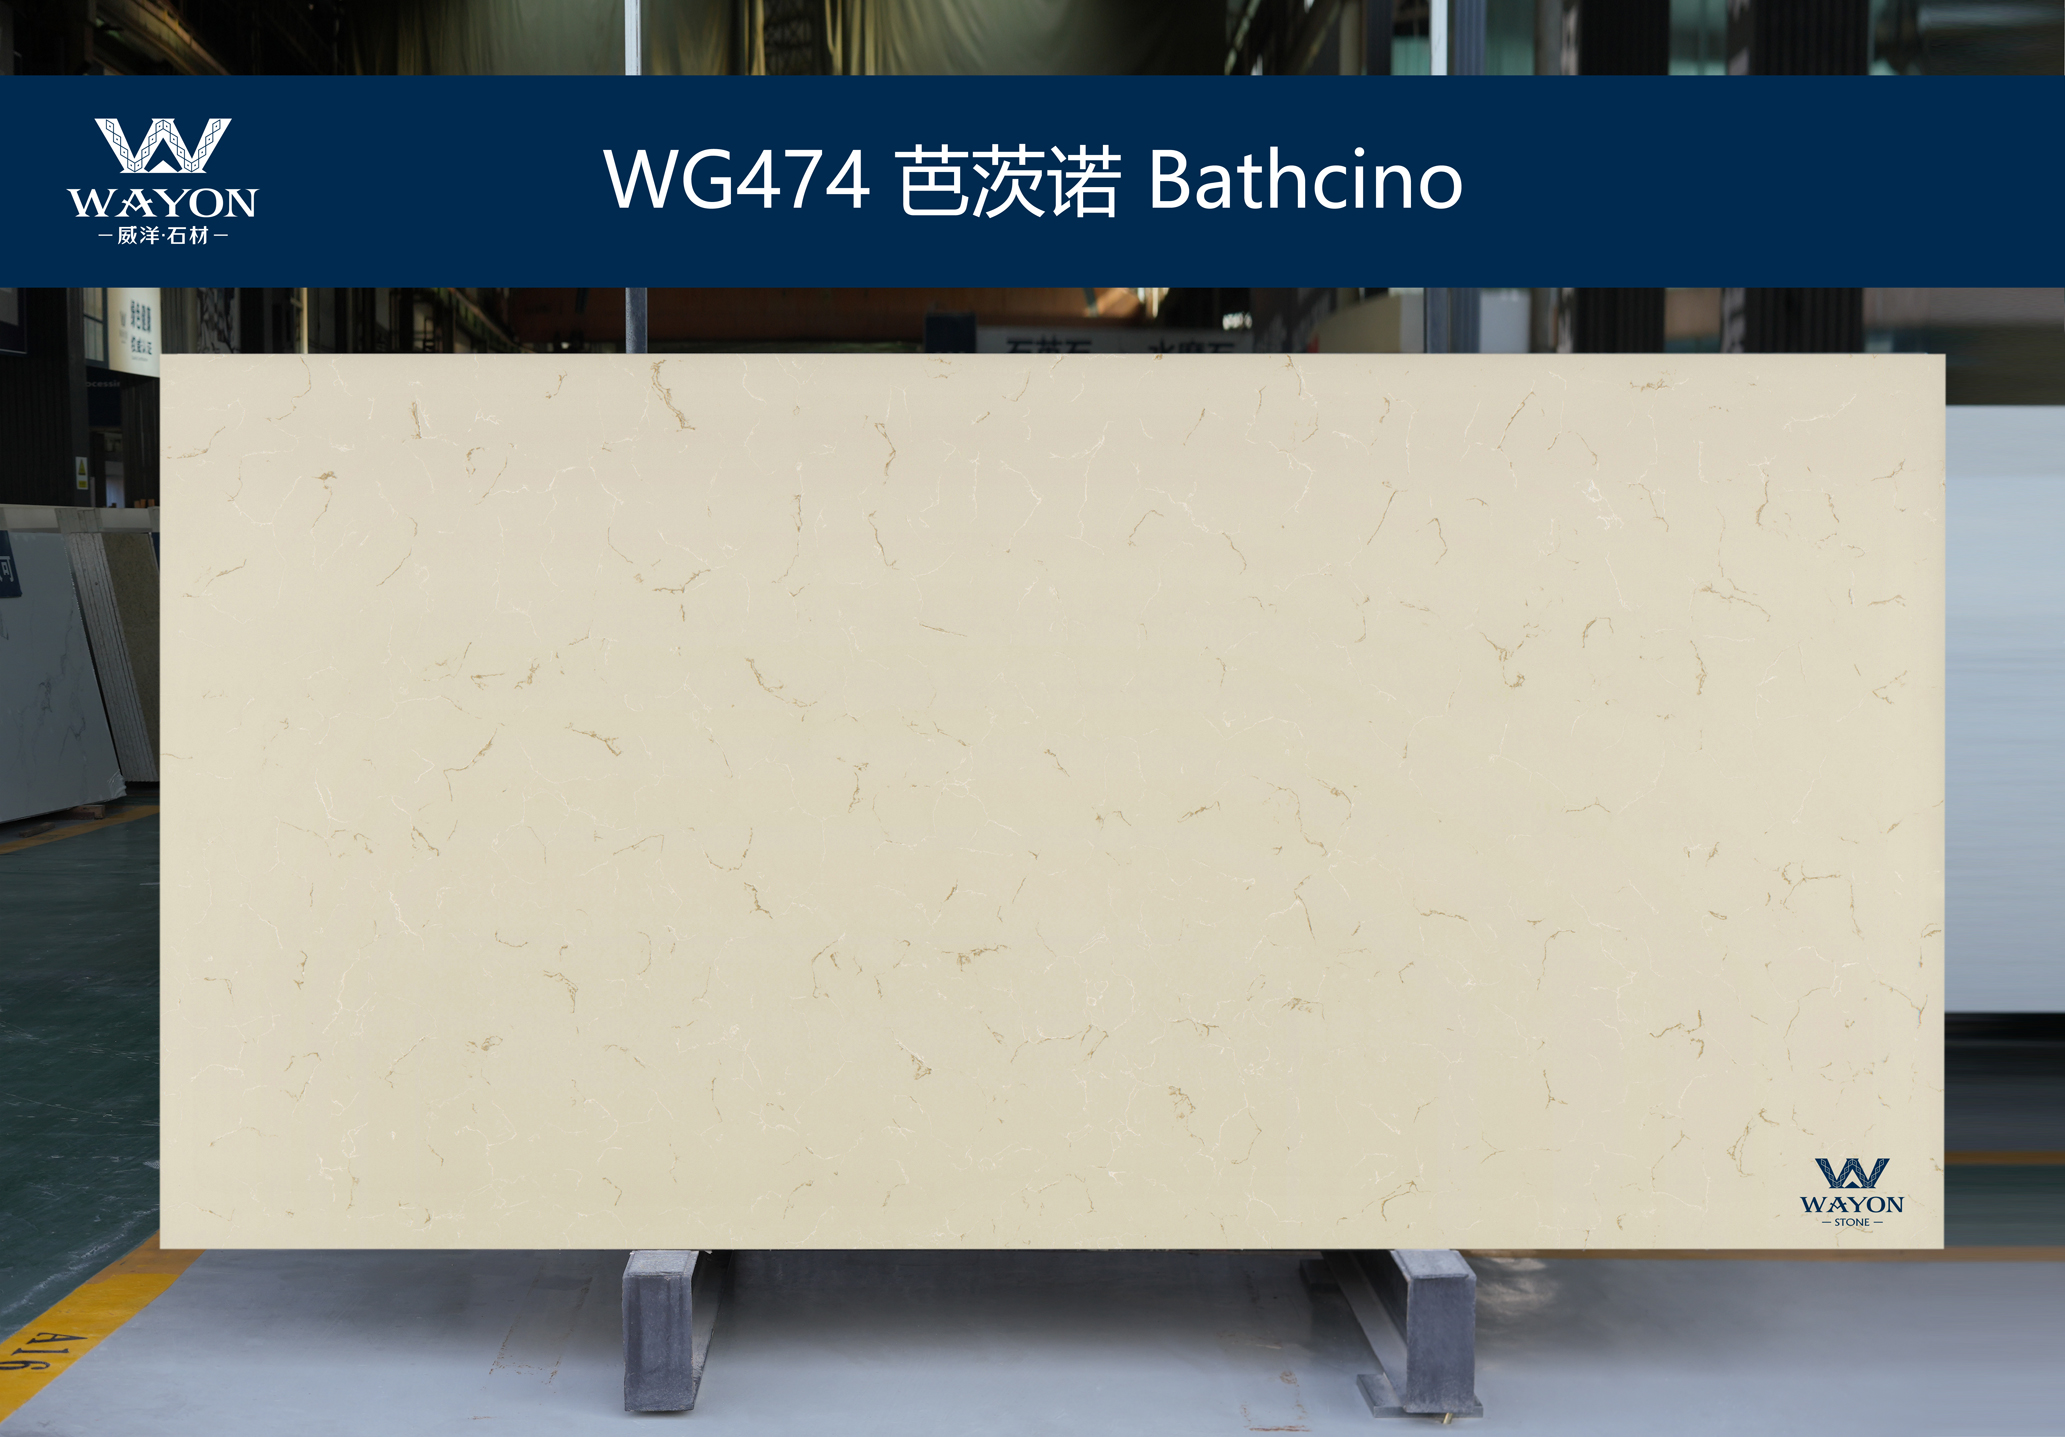 WG474 Bathcino